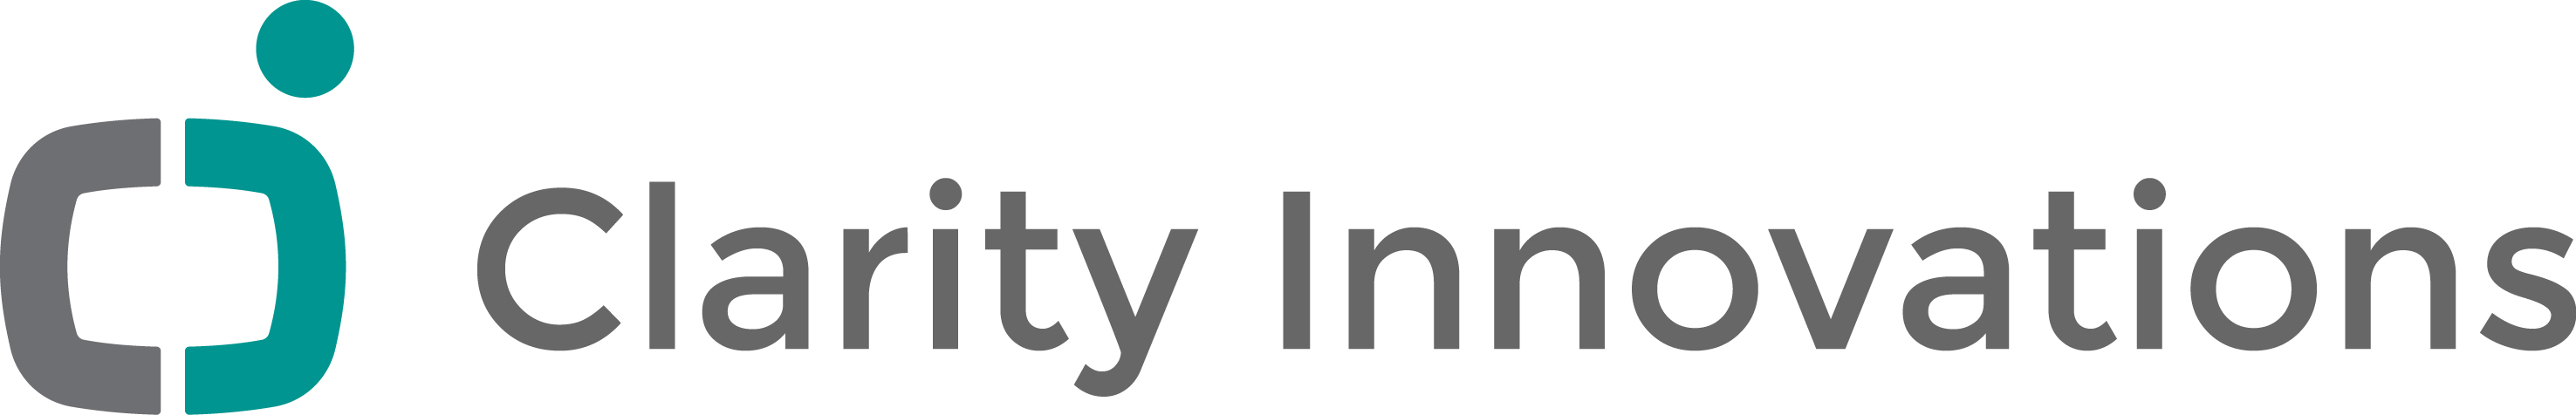 Clarity Innovations Logo